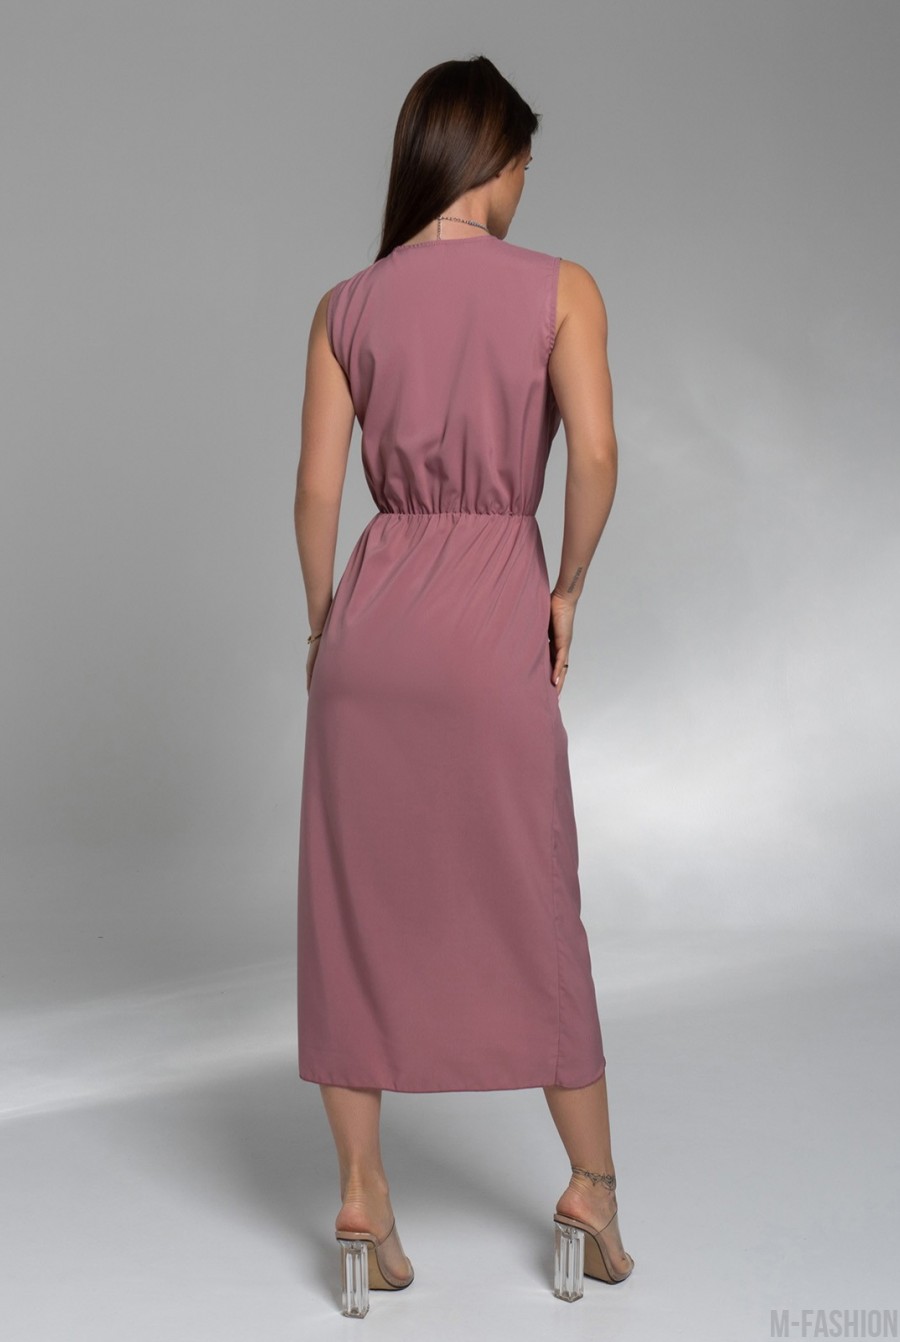 Темно-розовое платье без рукавов кроя на запах - Фото 3